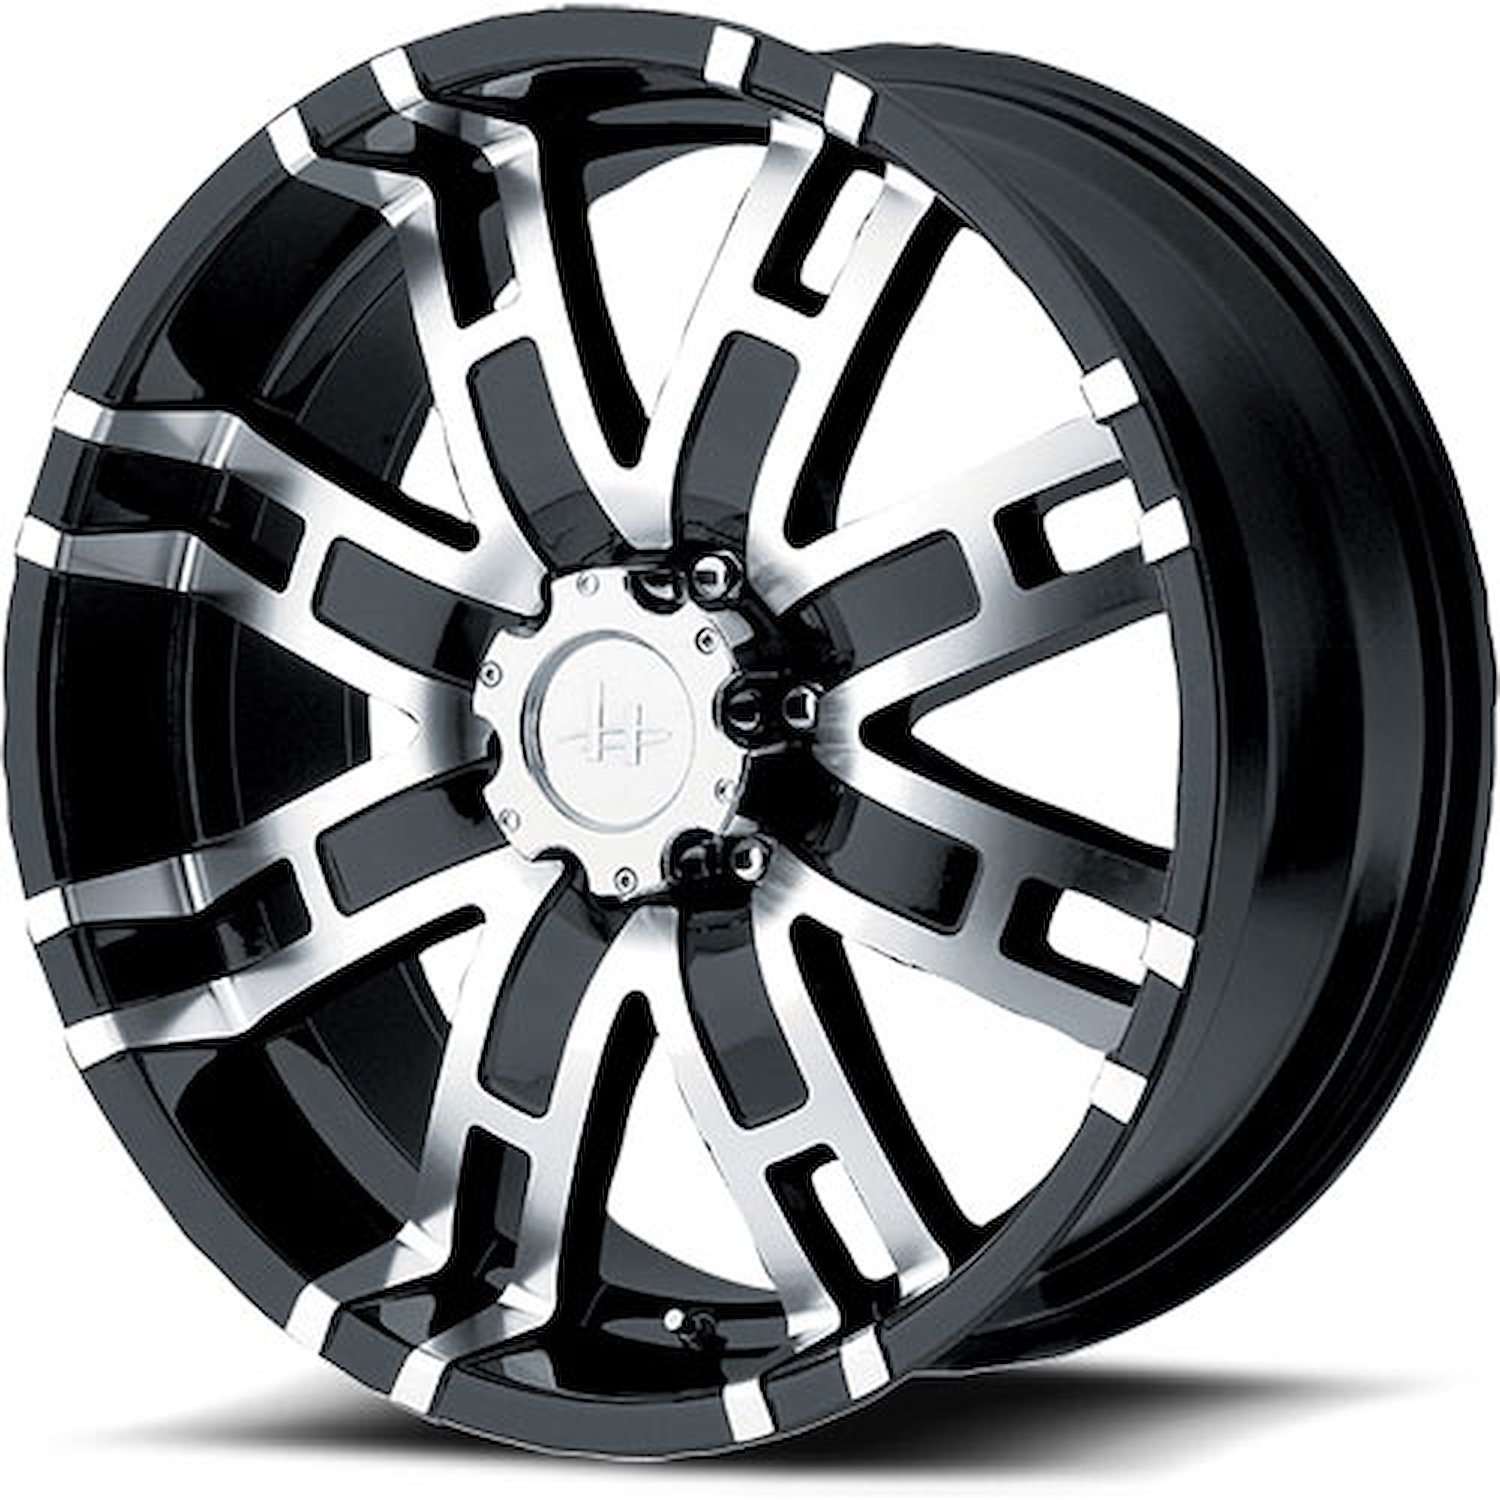 Helo Series 835 Black Wheel Size: 17" x 8"